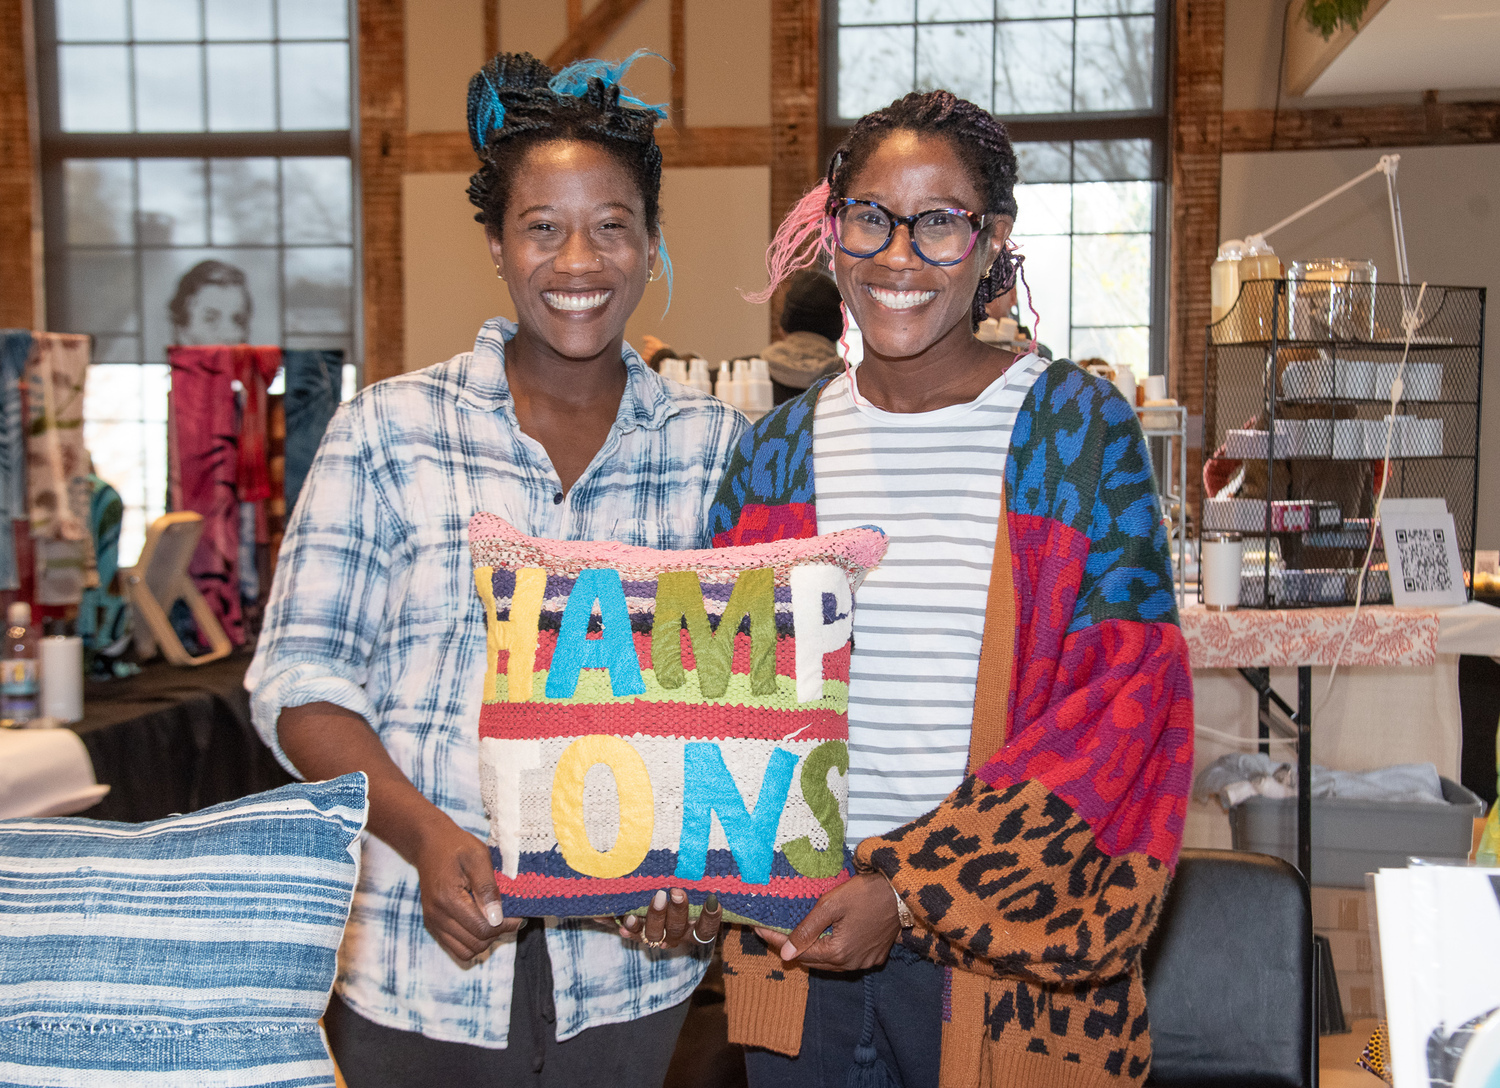 Temida and Tanya Willock were among those offering their handmade items at Makers Market at The Church last weekend. LISA TAMBURINI